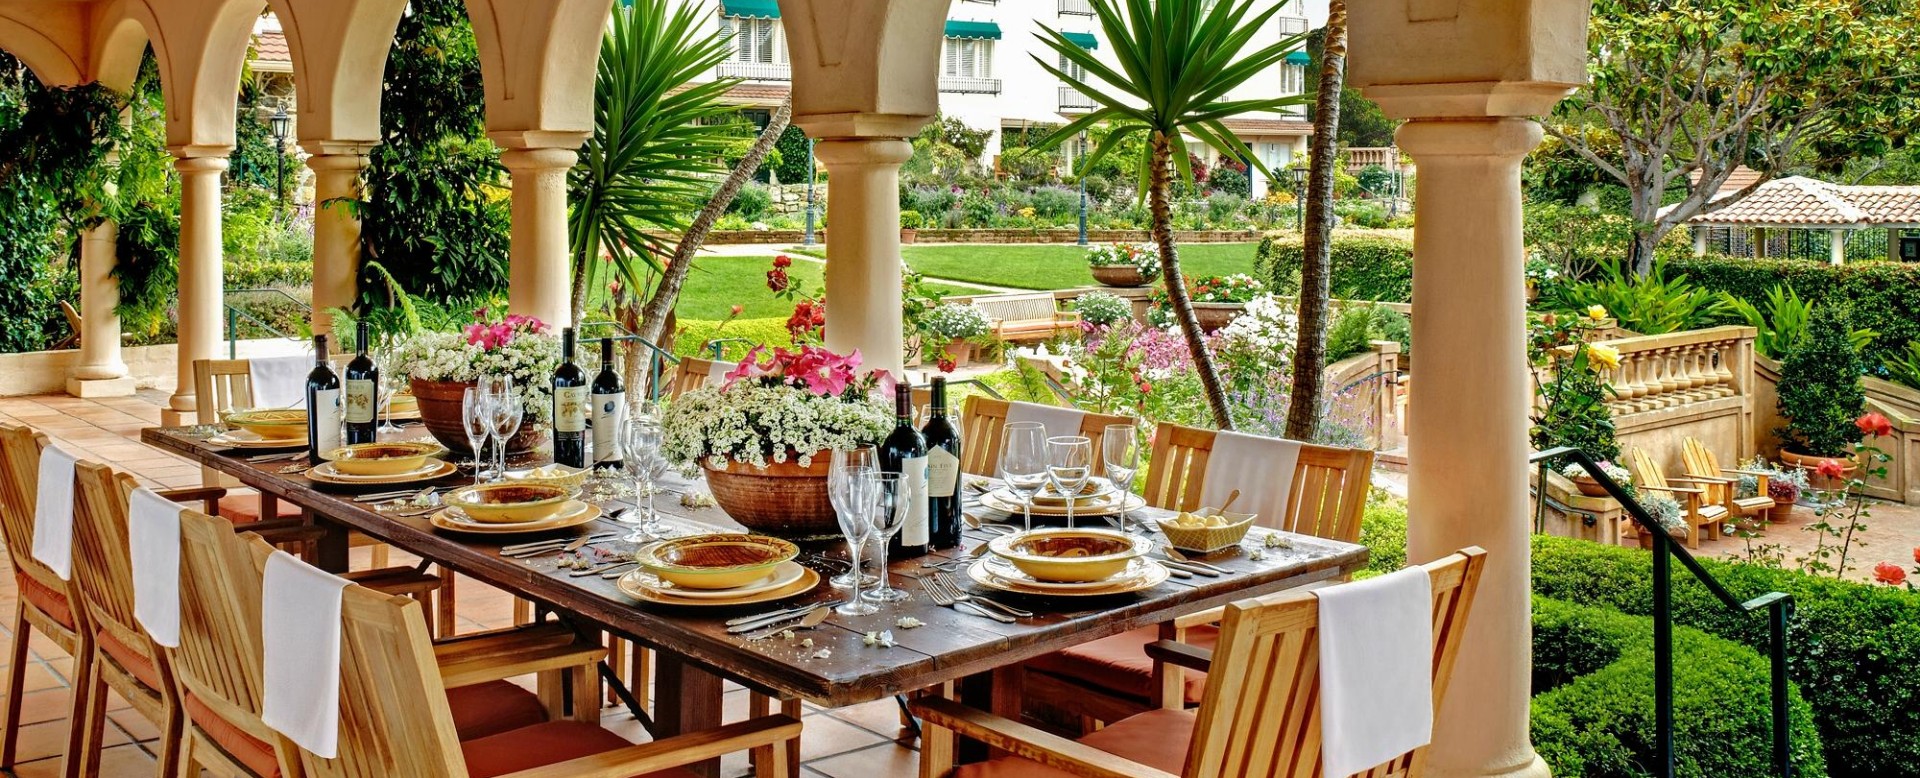 La Playa Carmel - dining on patio